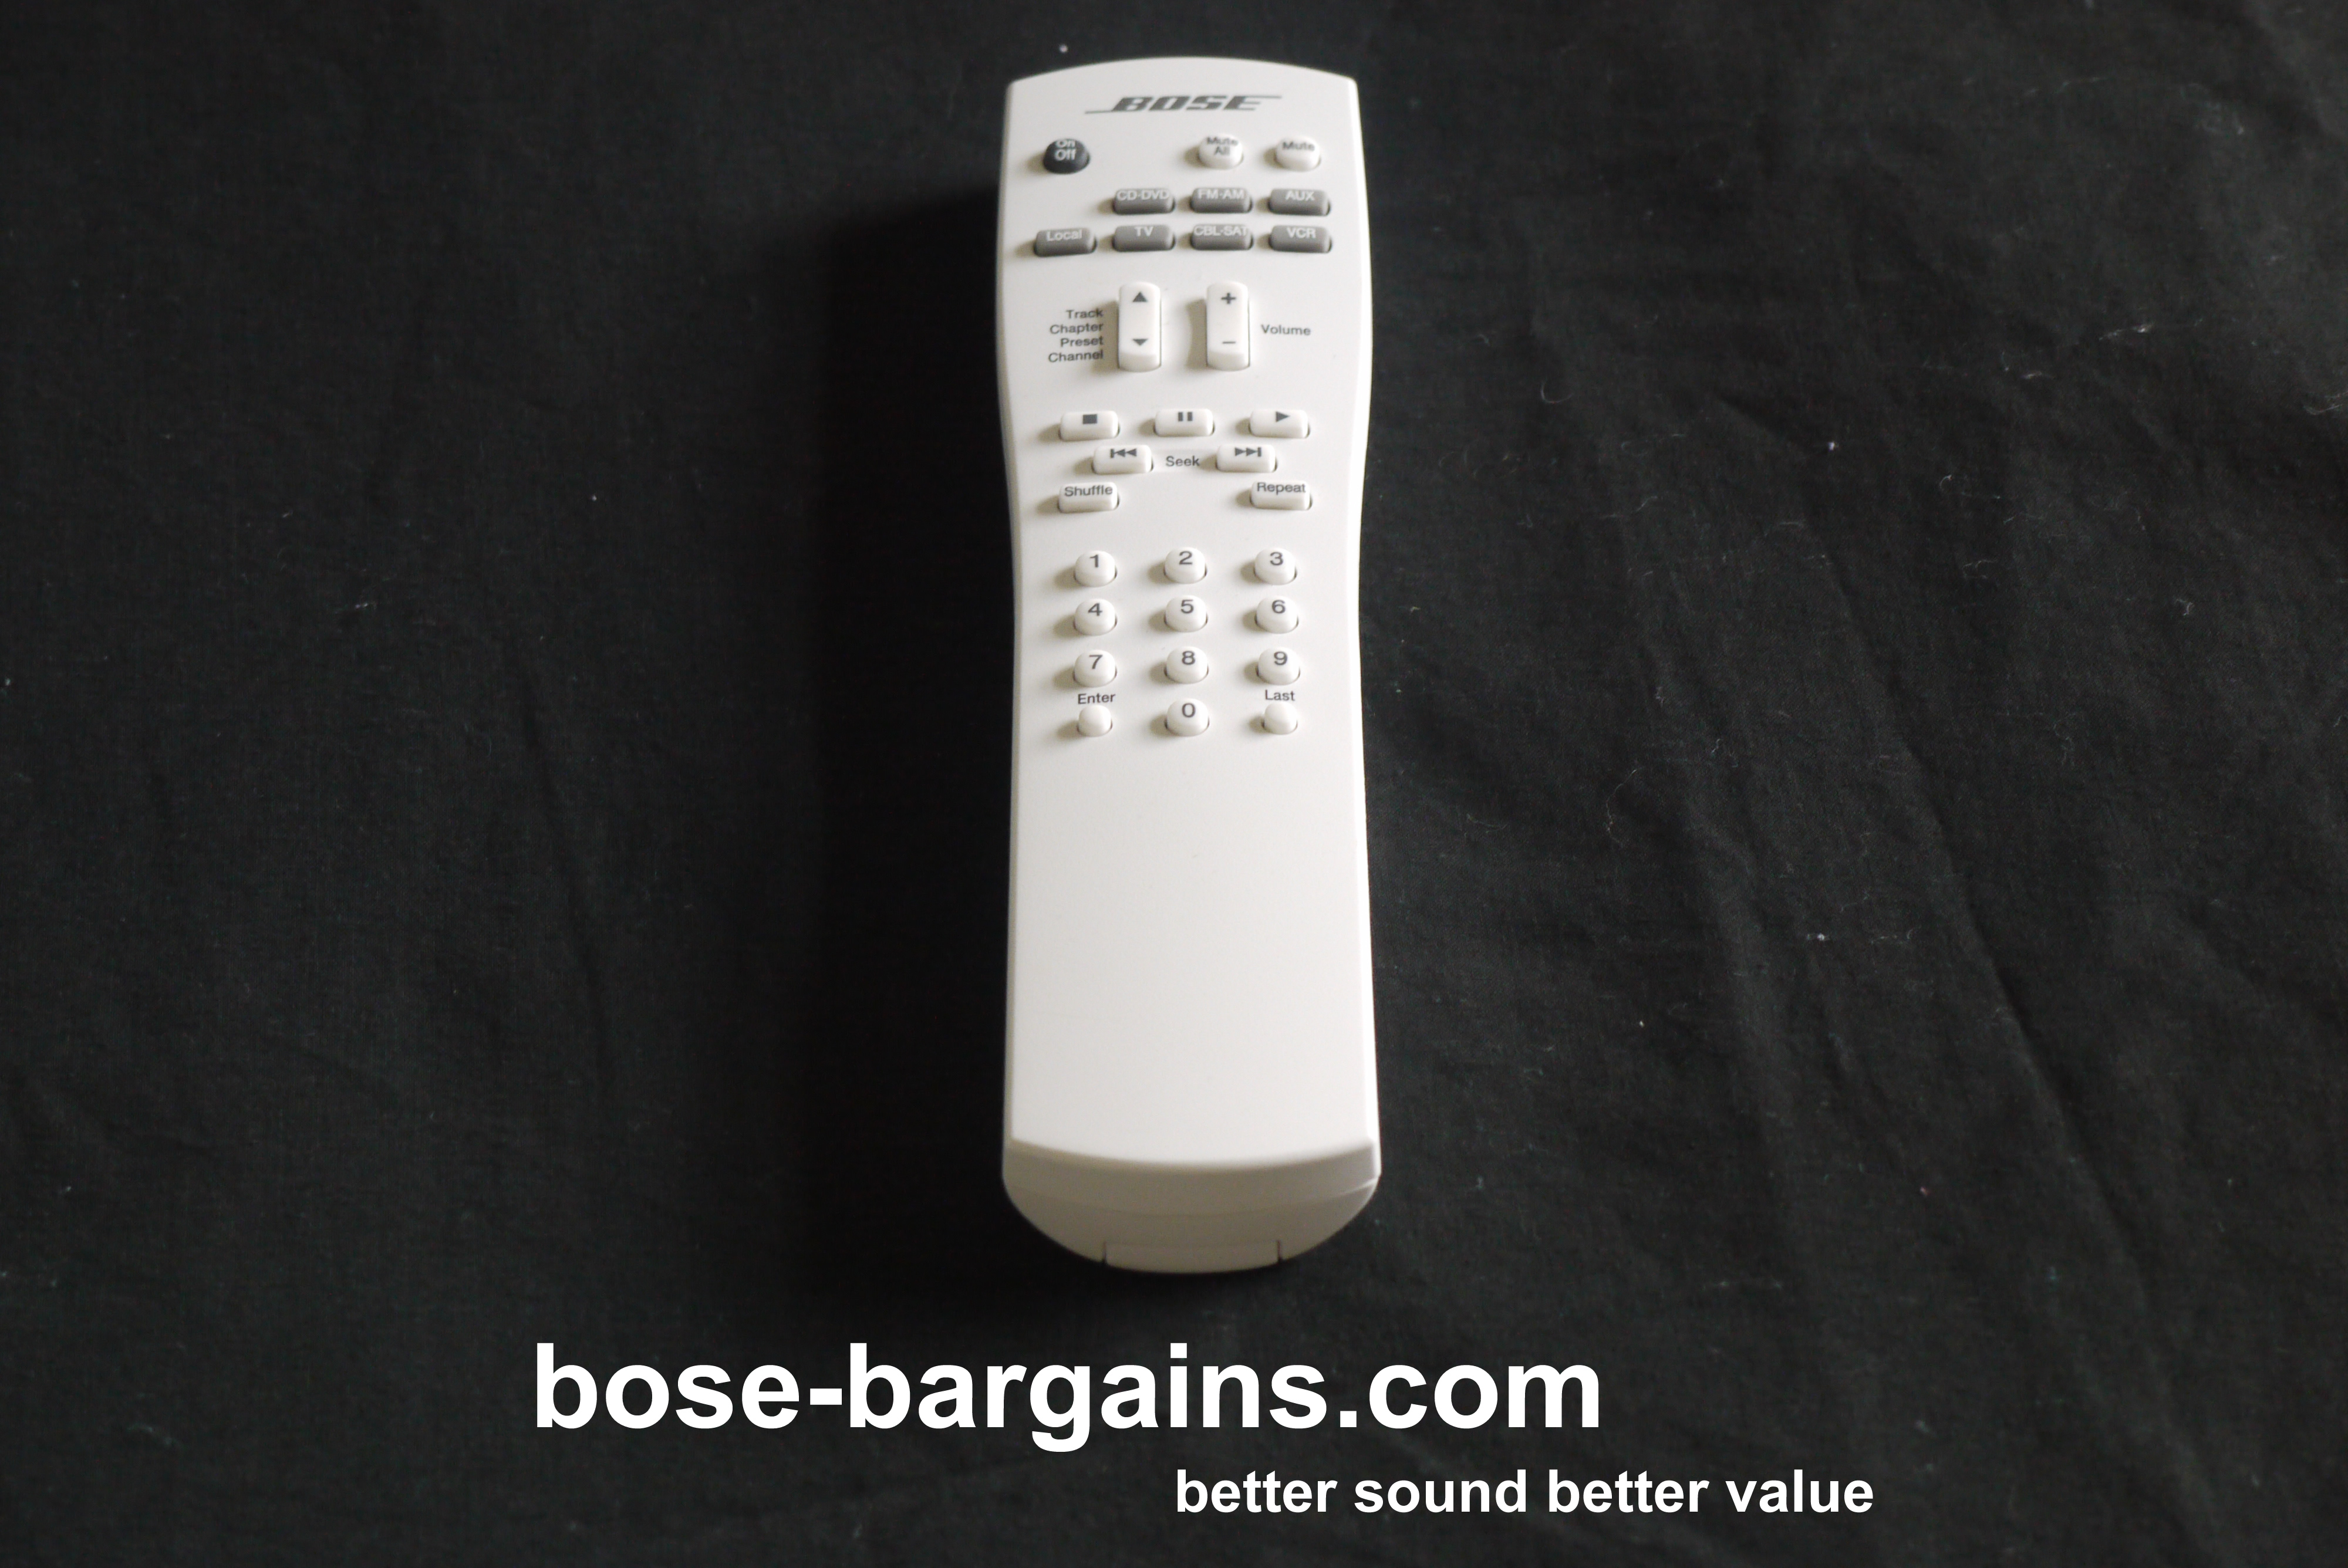 Hollywood Hav begynde Bose RC-18 Remote Control - bose-bargains.com